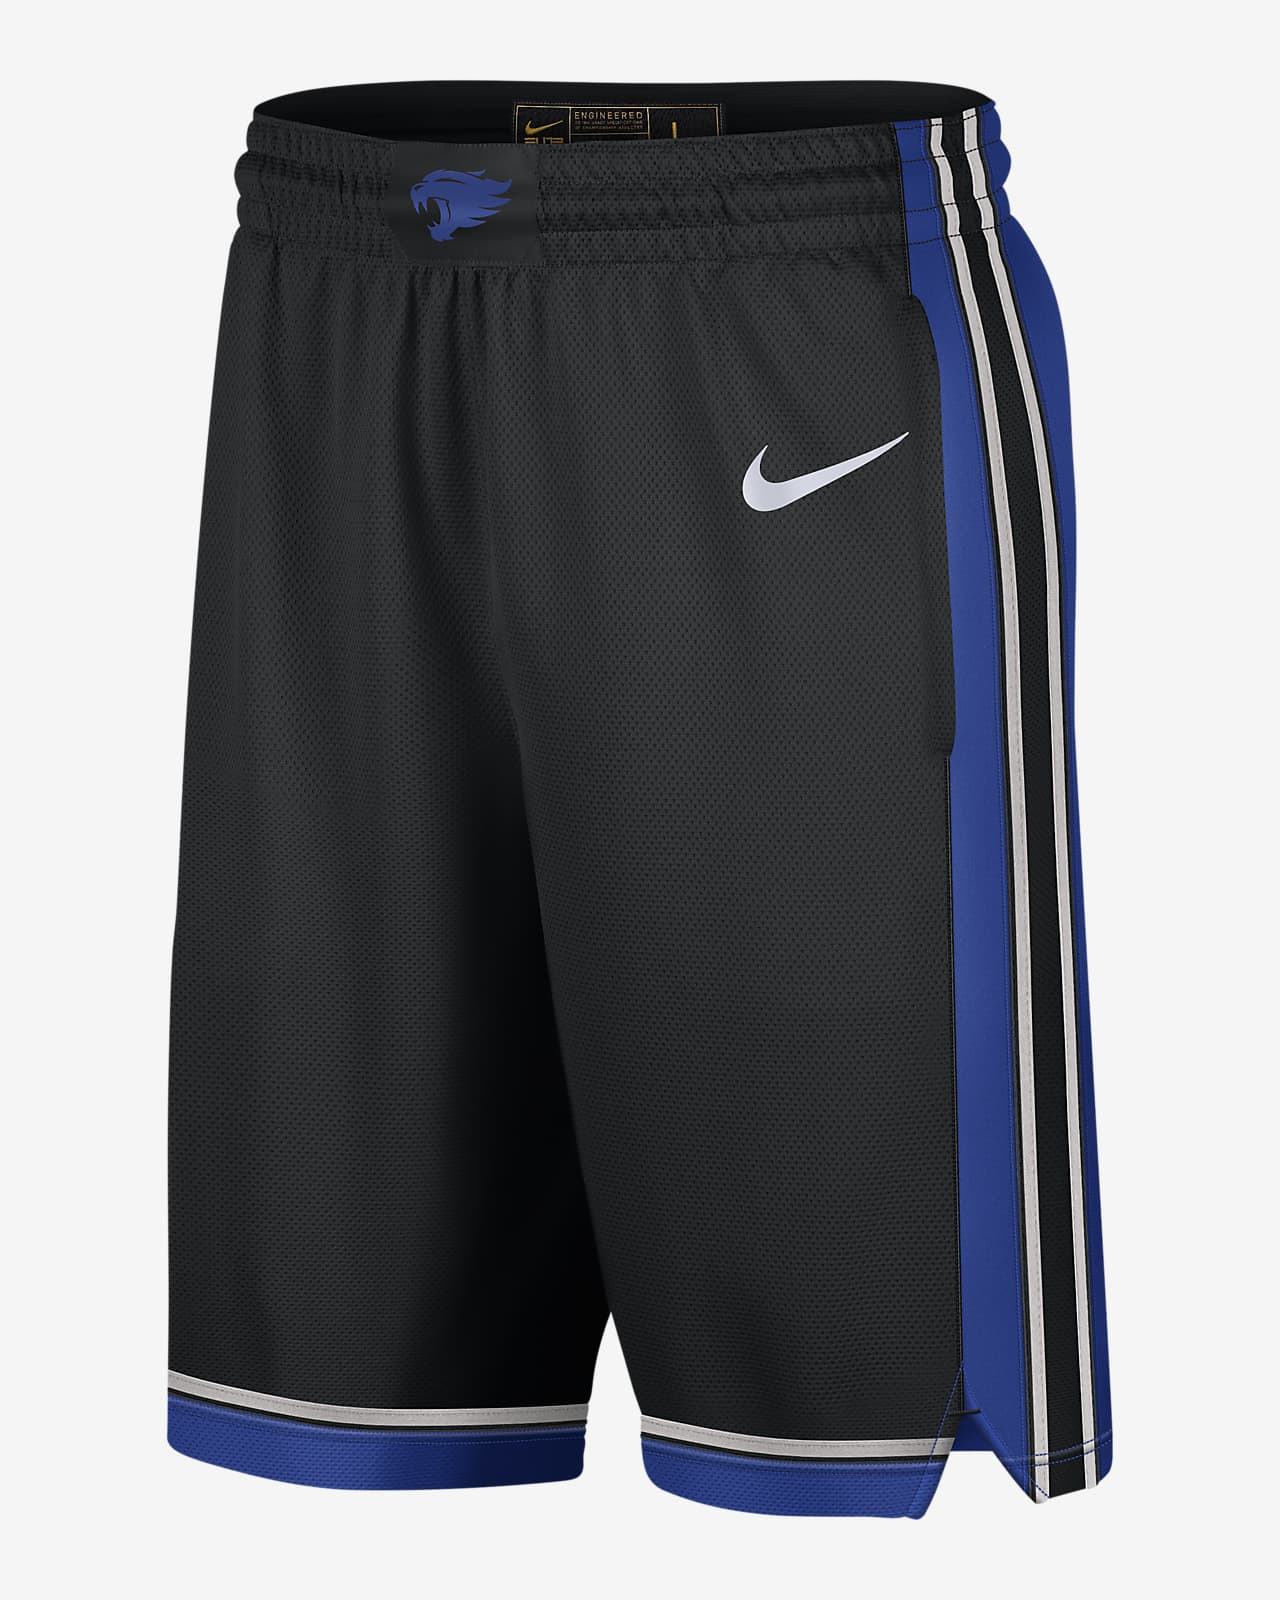 Nike College (Kentucky) Men's Replica Basketball Shorts